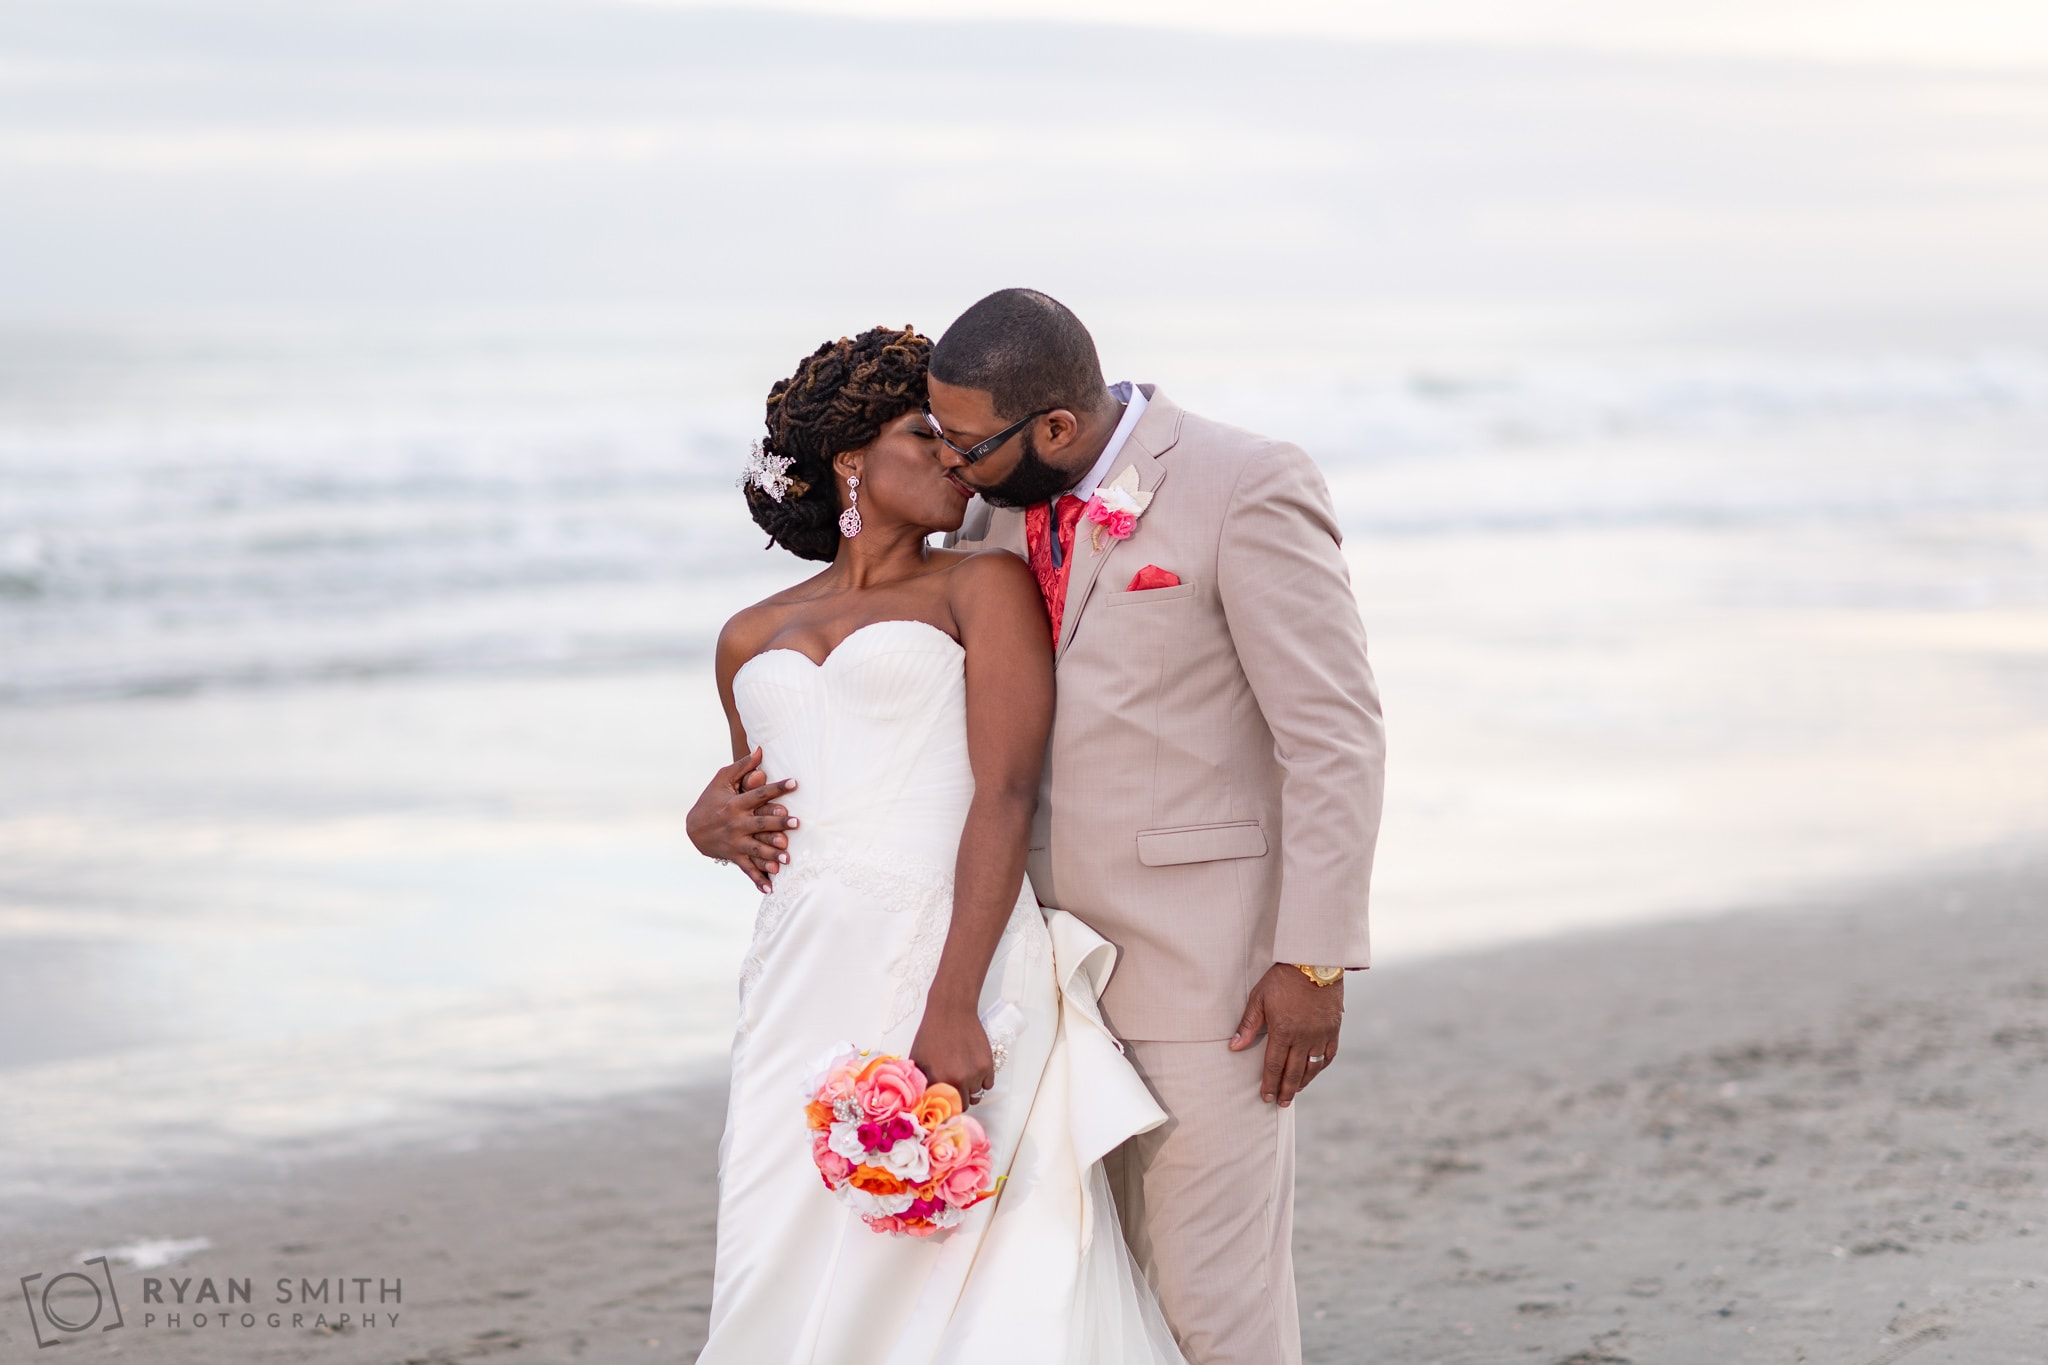 Kiss in front of the ocean - Doubletree Resort - Myrtle Beach